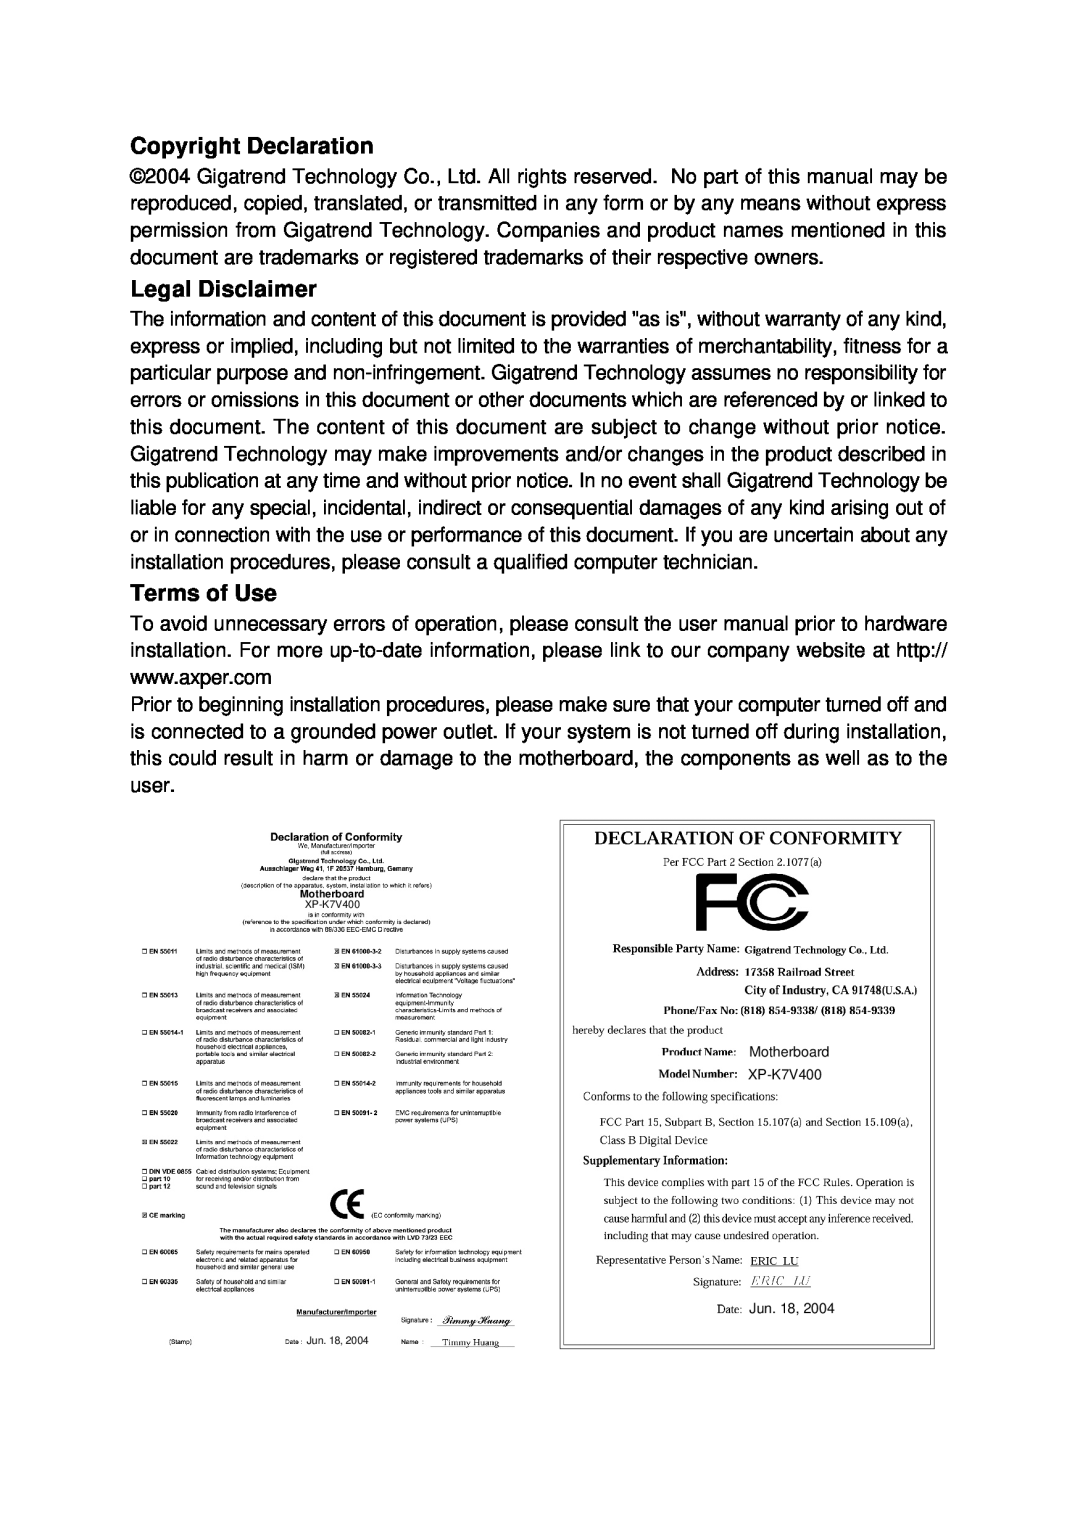 AMD user manual Copyright Declaration, Legal Disclaimer, Terms of Use, Motherboard XP-K7V400 Jun. 18 